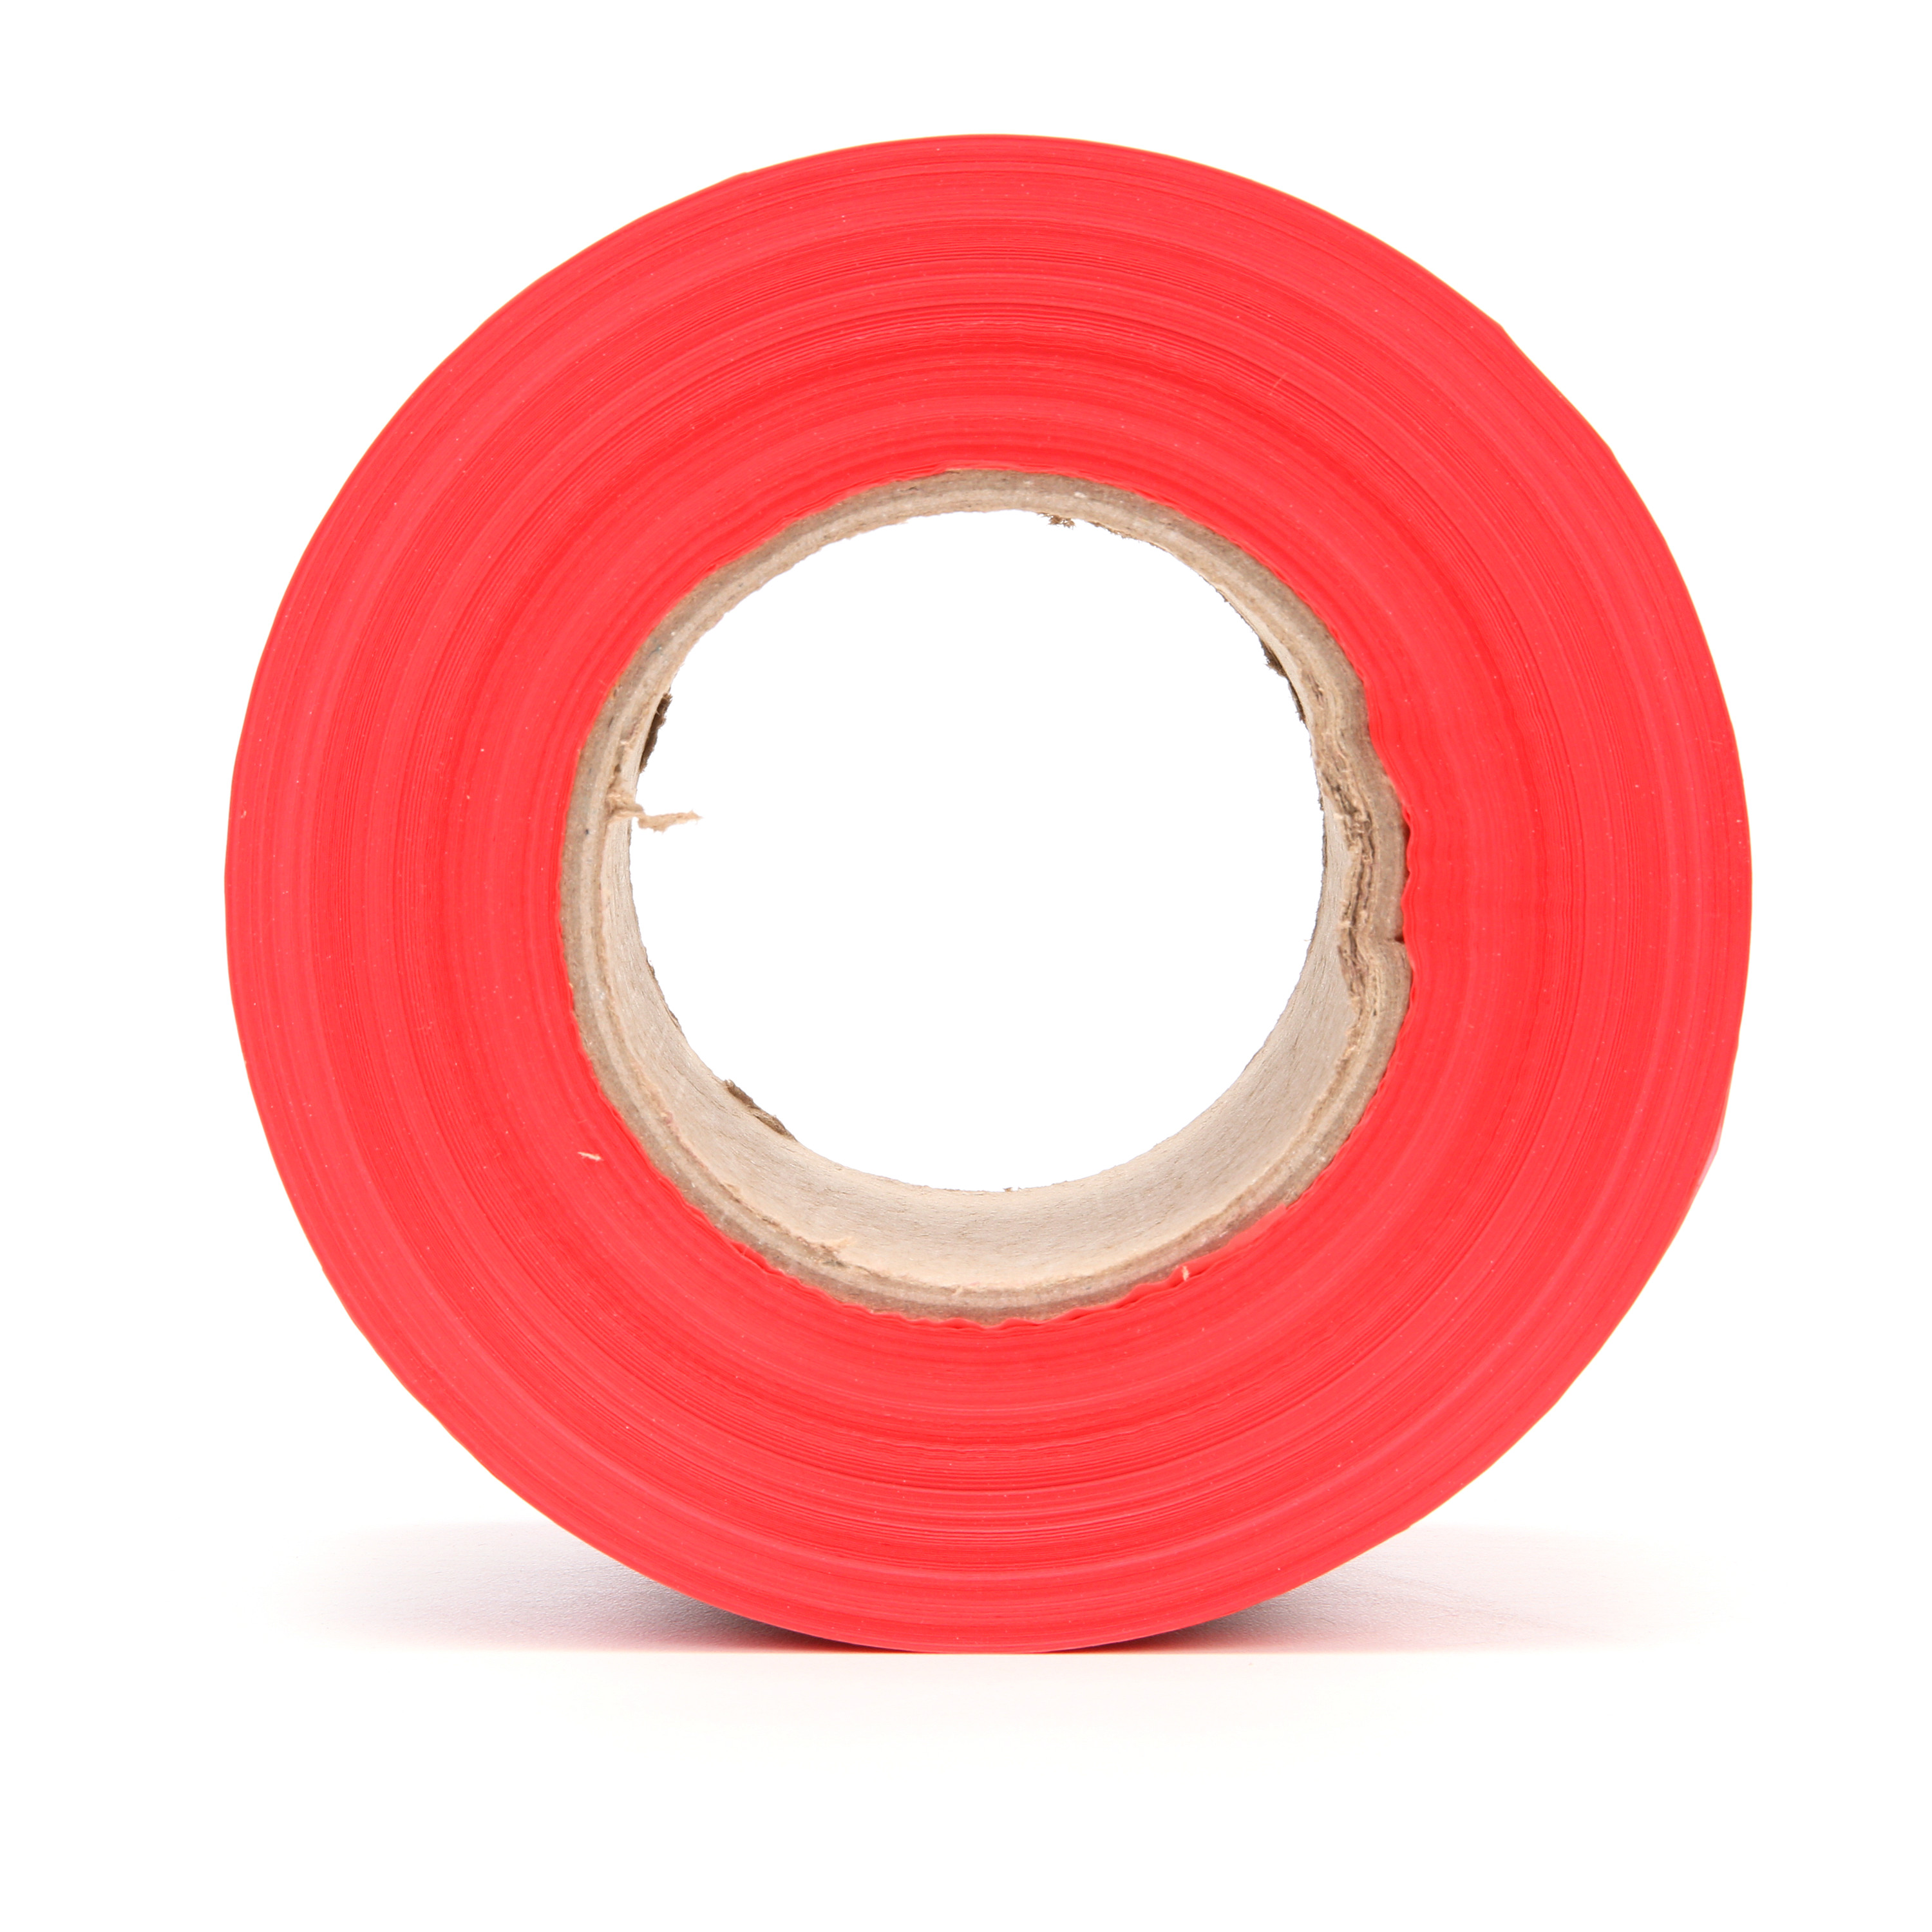 Scotch® Barricade Tape 381, DANGER / PELIGRO, 3 in x 1000 ft, Red, 8
rolls/Case